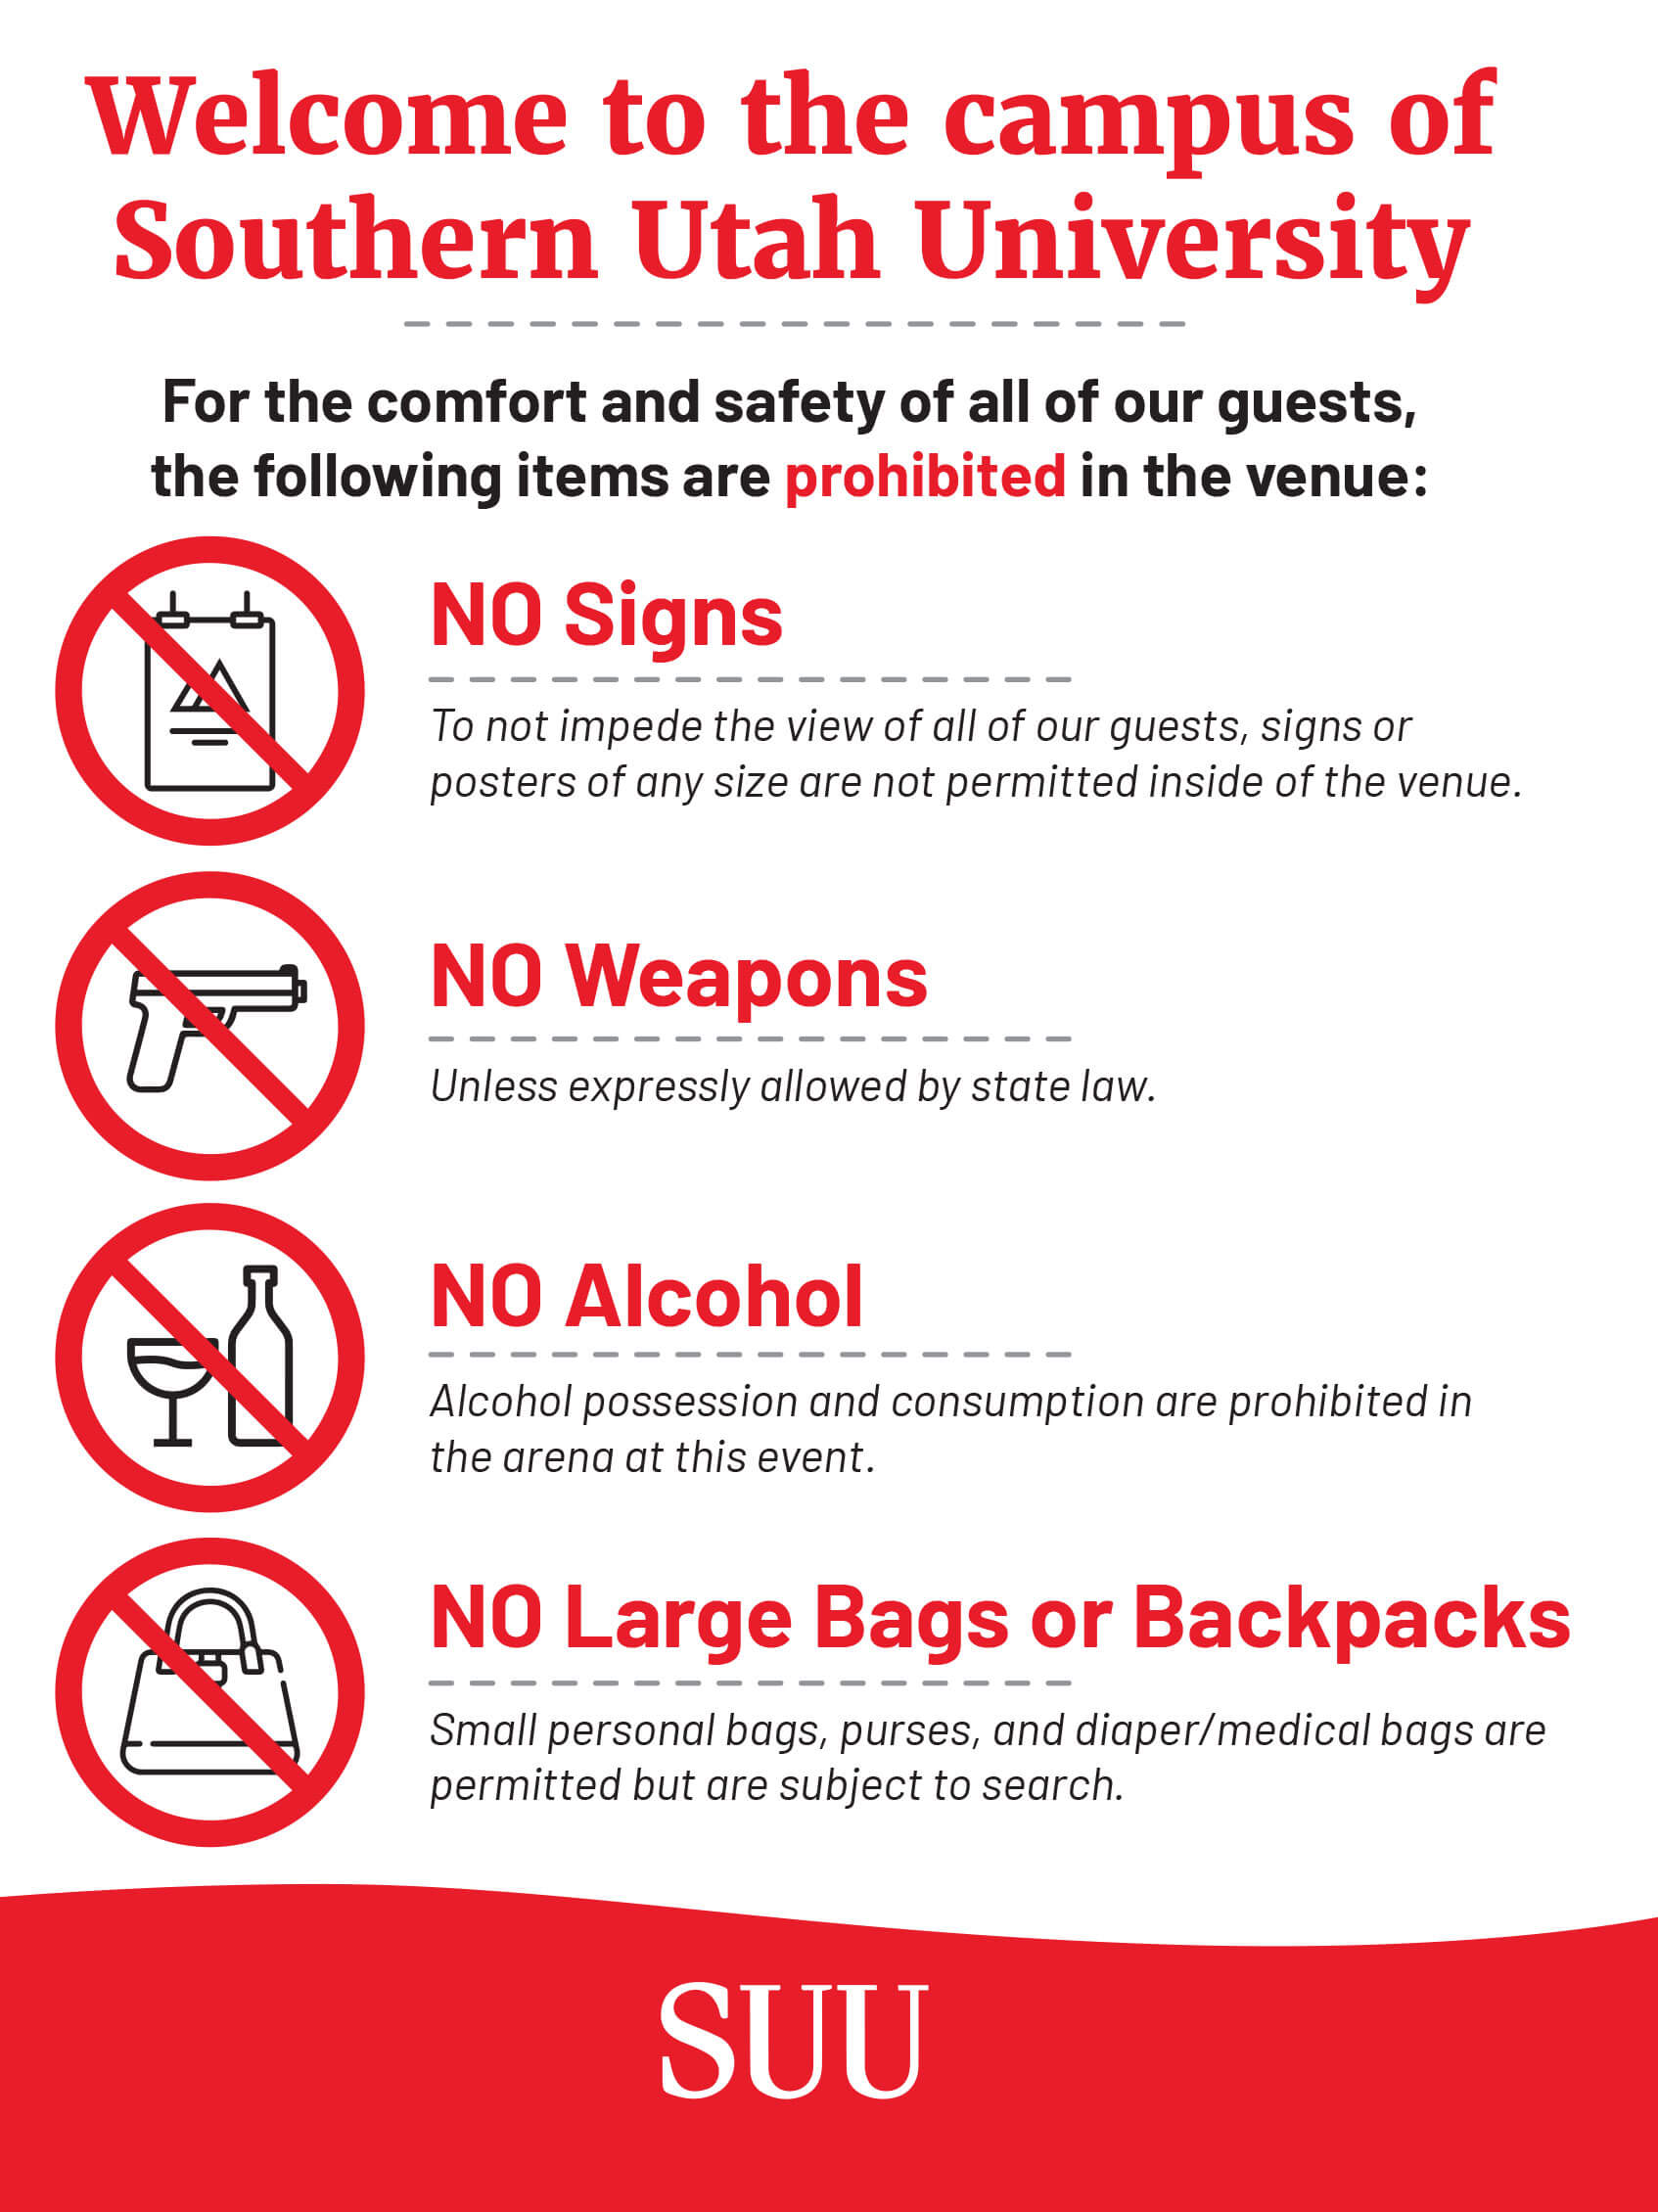 Prohibited Items in the Venue for SUU's Graduation